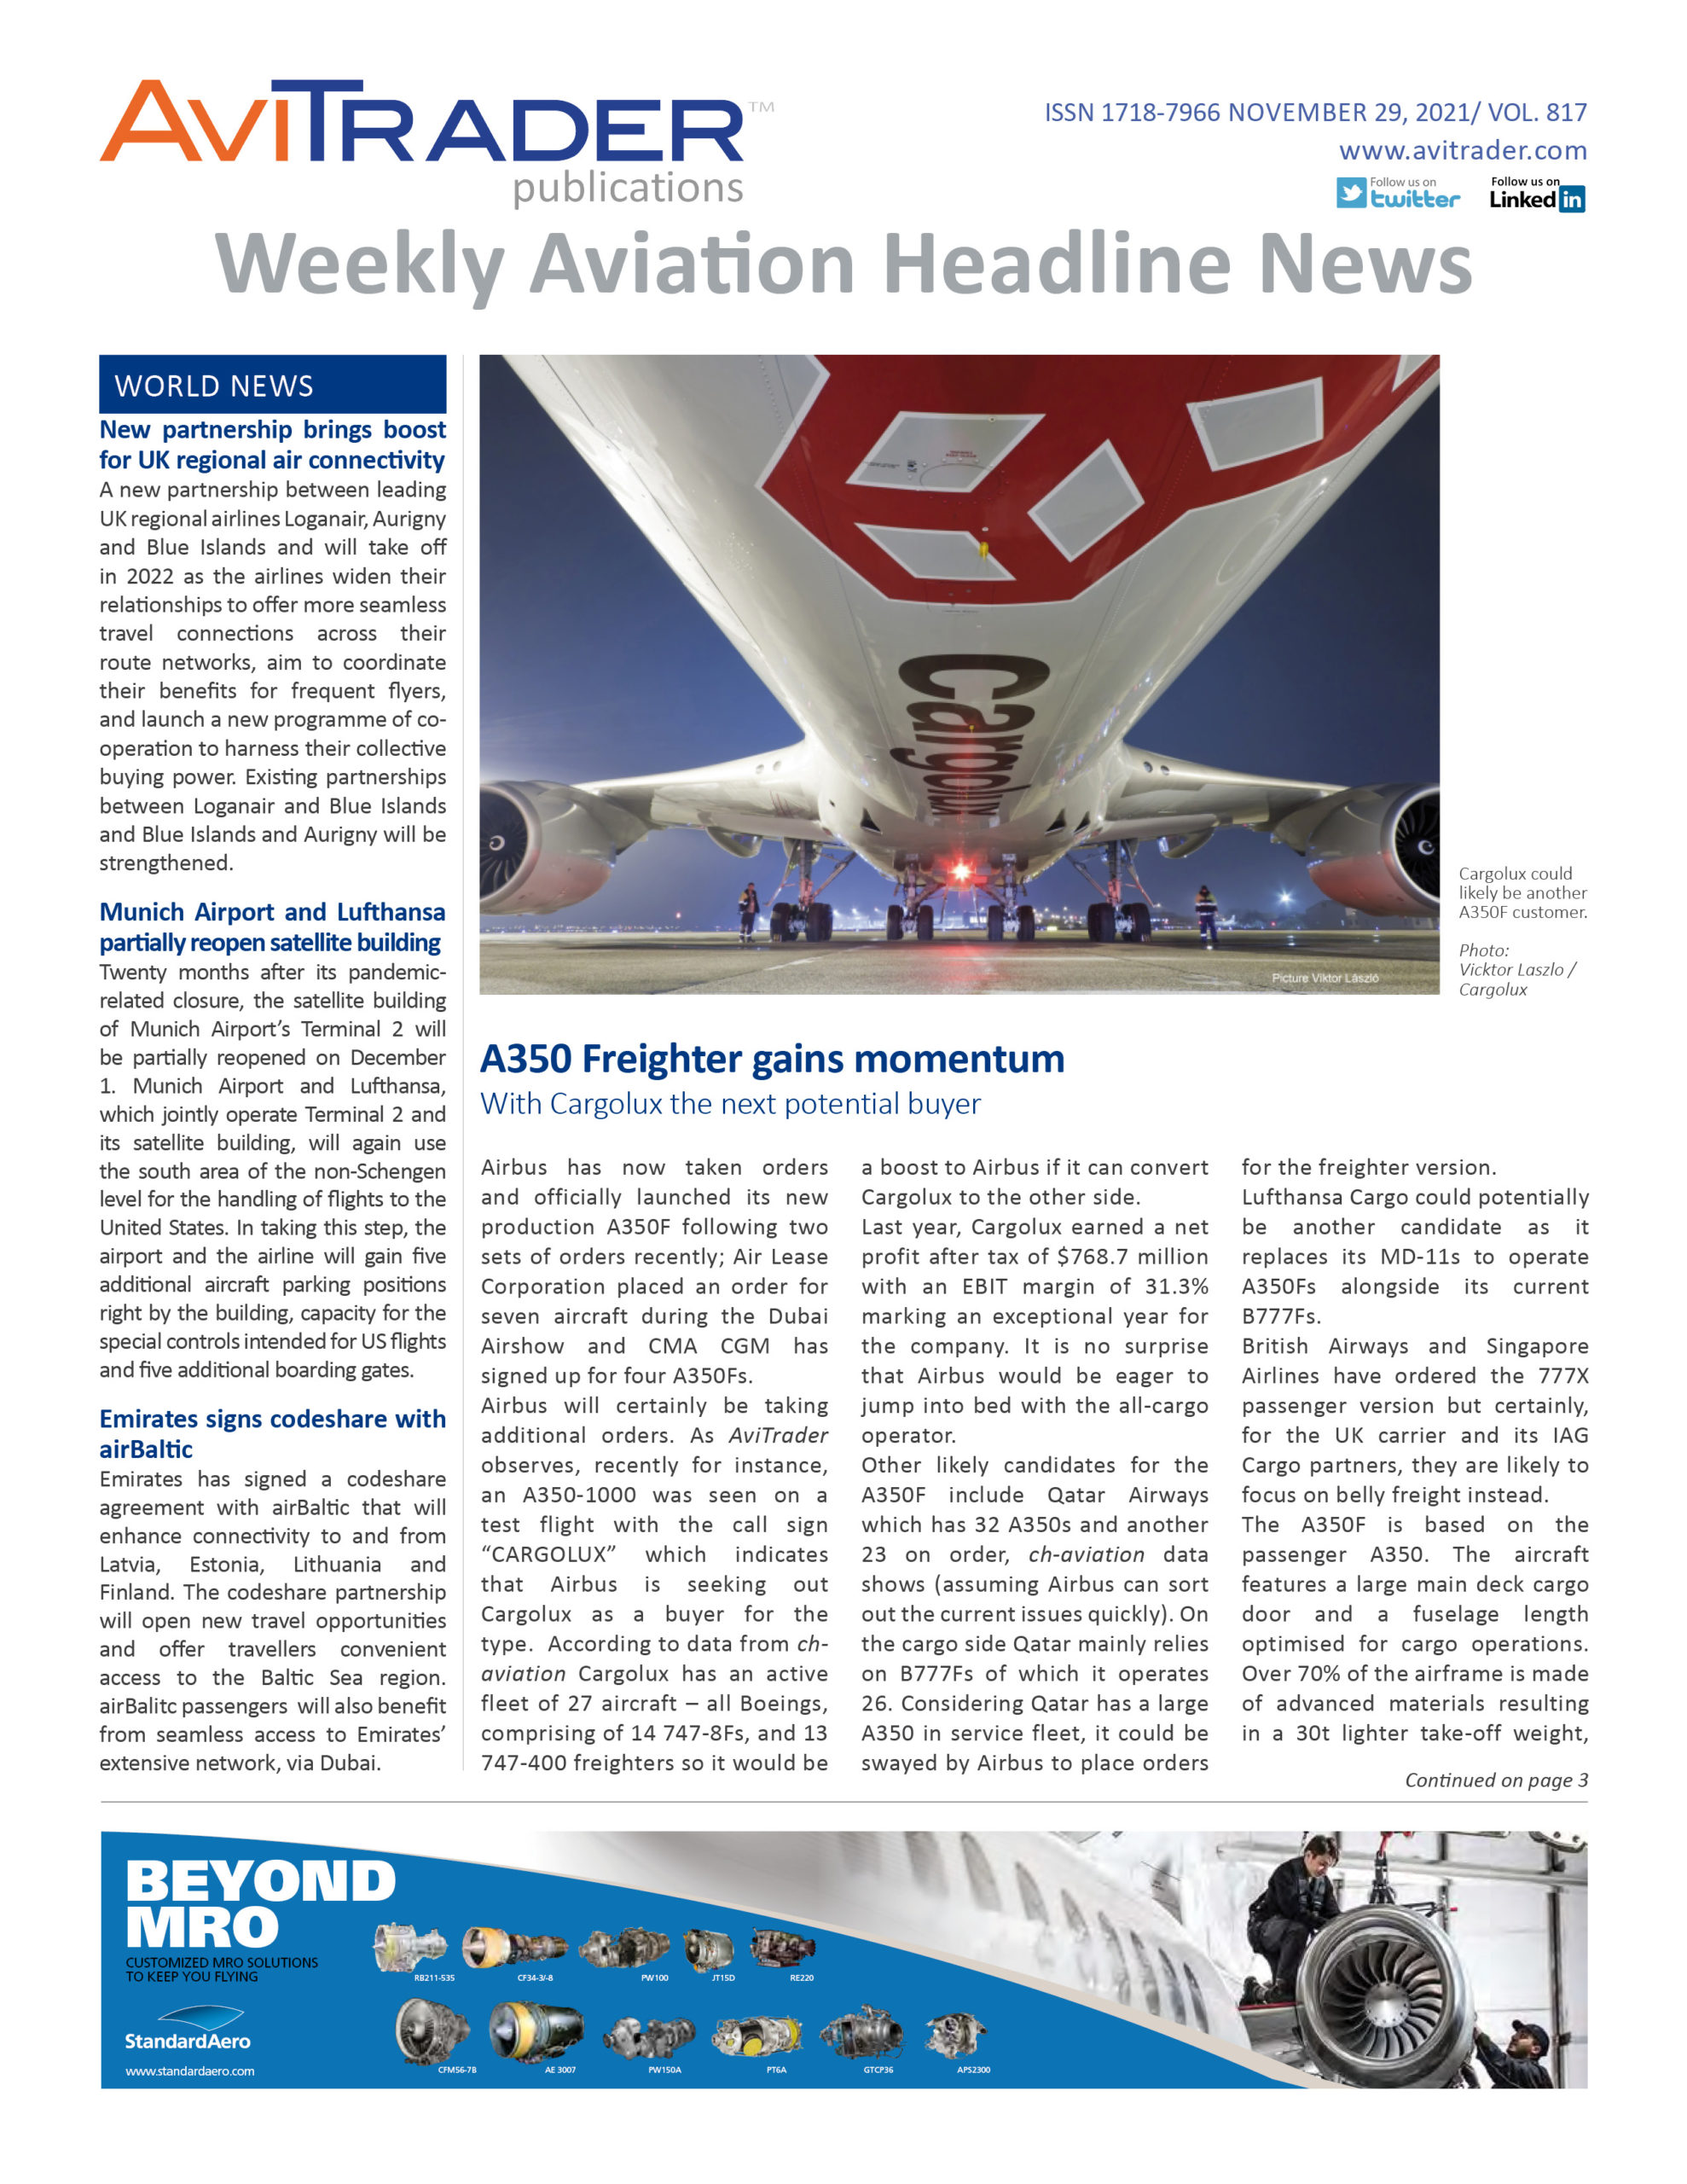 AviTrader_Weekly_Headline_News_Cover_2021-11-29